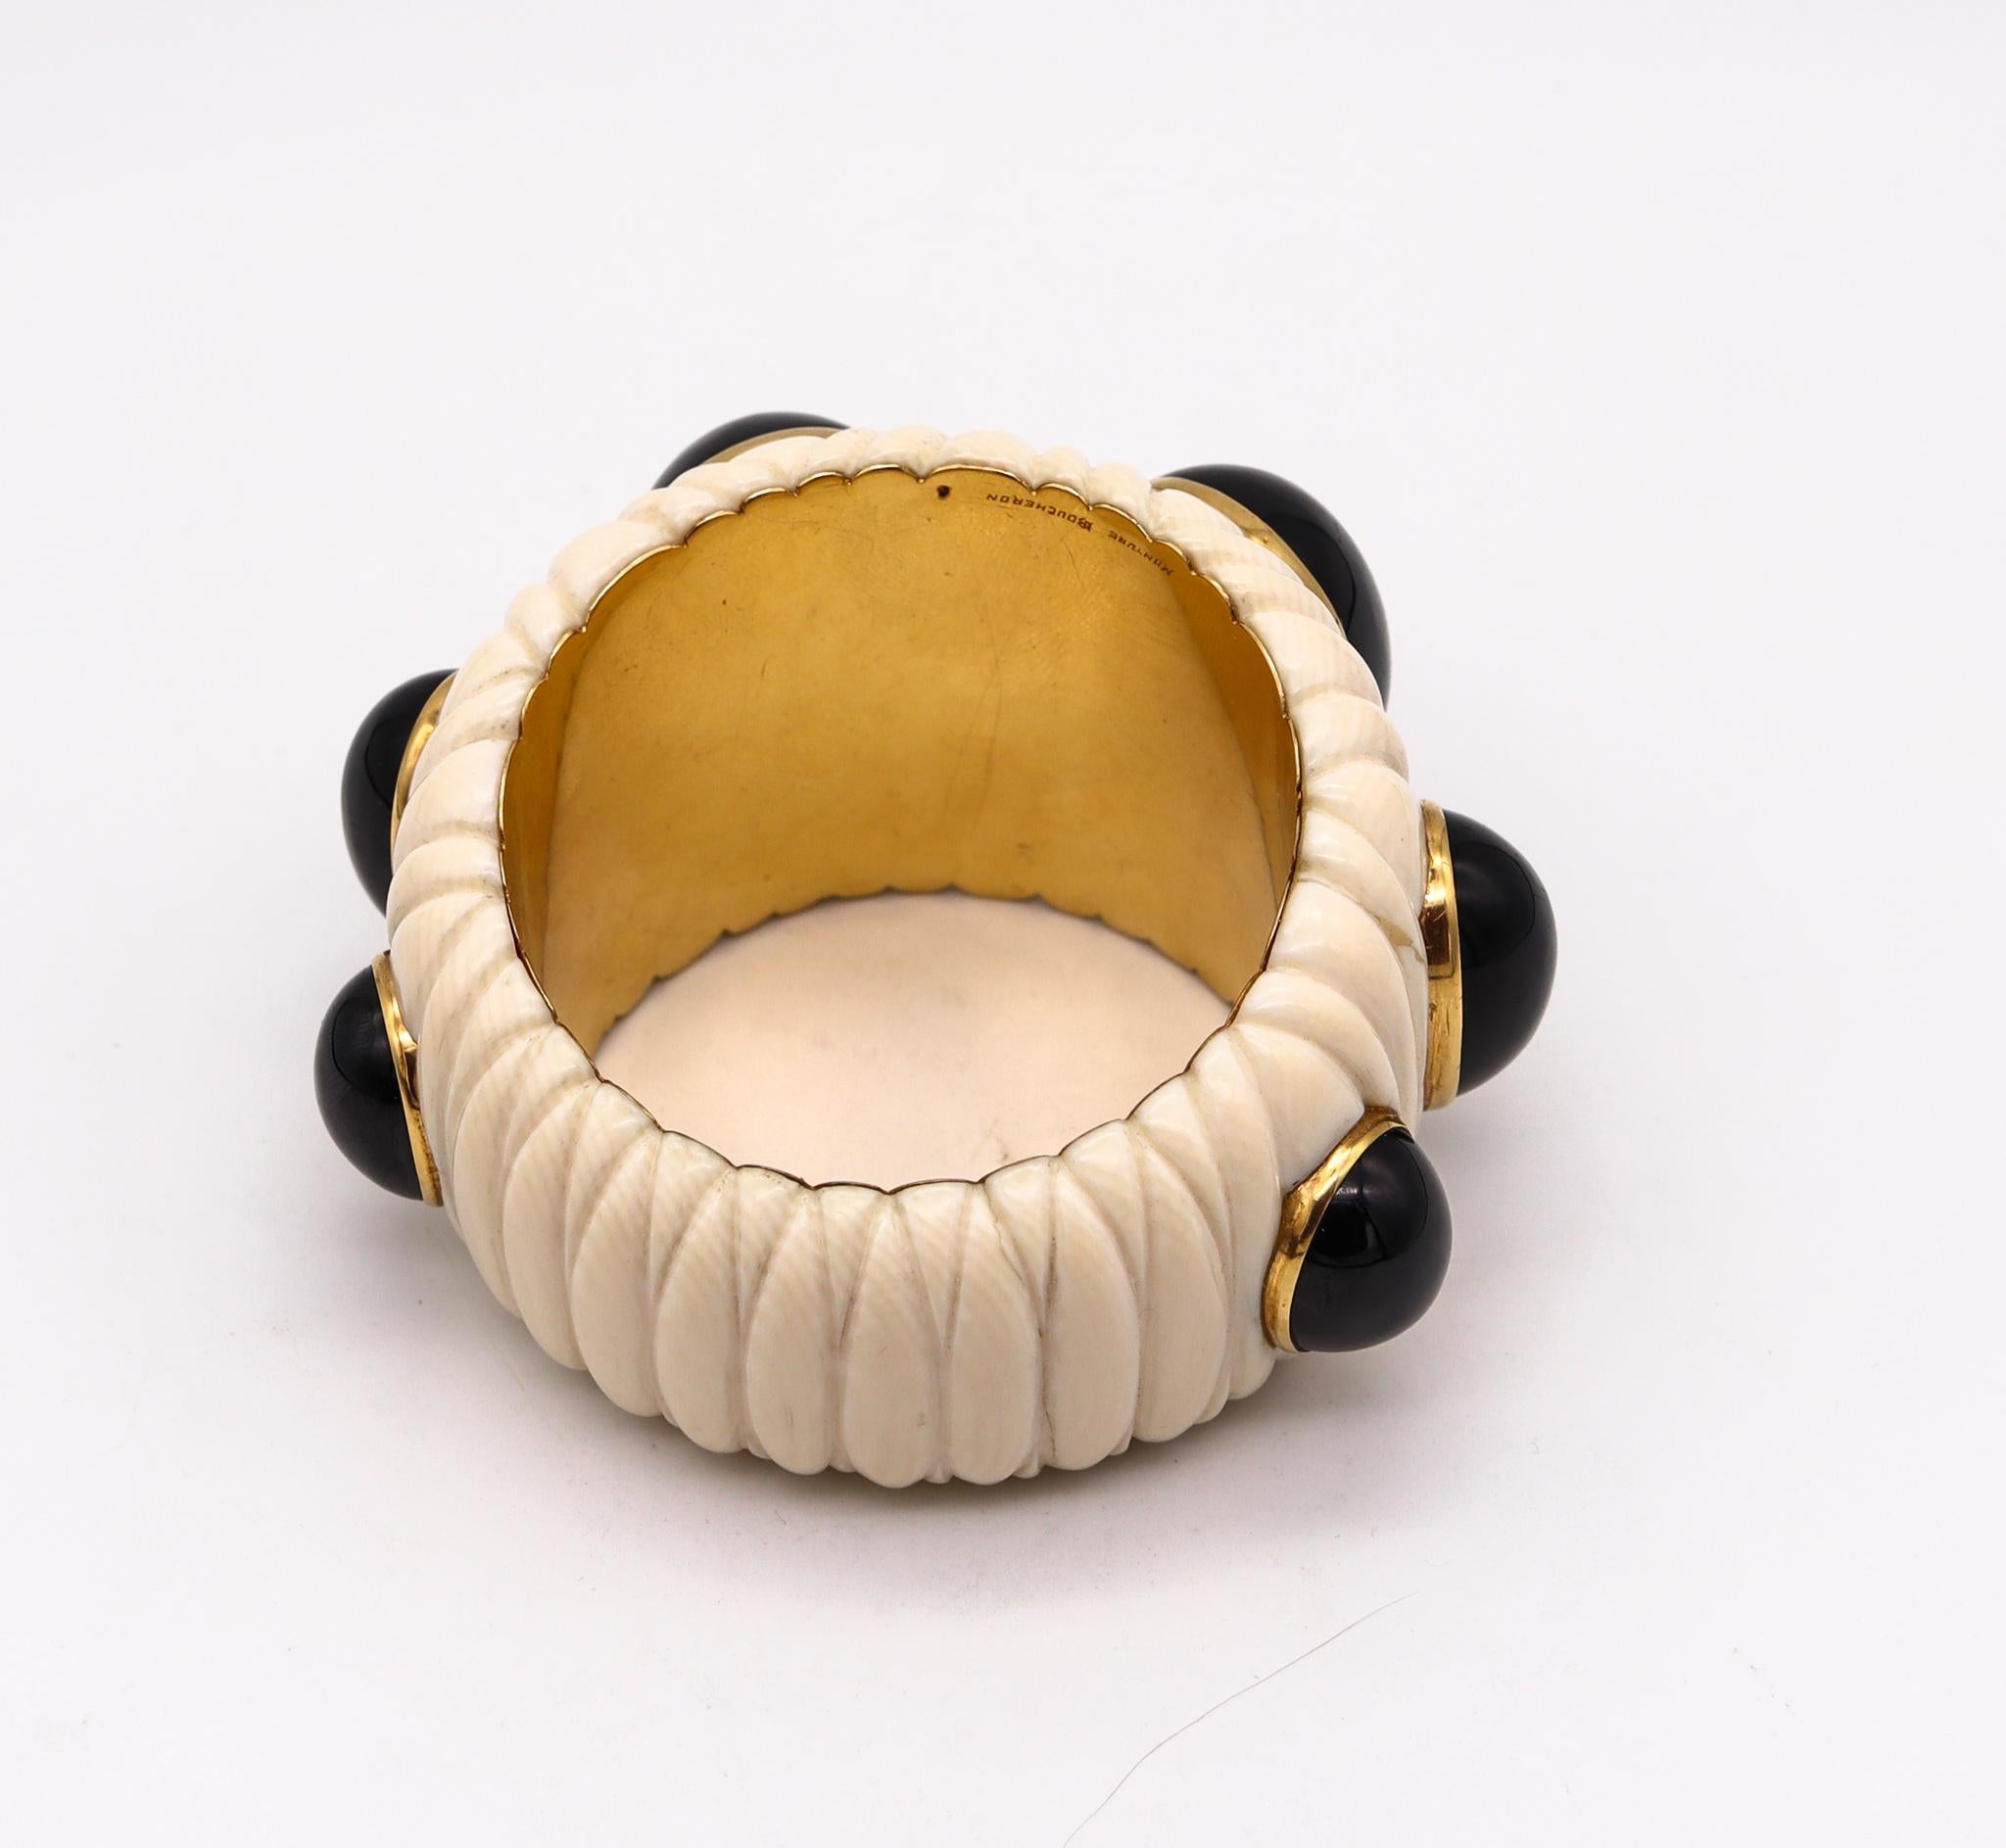 Cabochon Boucheron Paris 1930 Art Deco Bangle Bracelet in 18 Karat Yellow Gold with Onyx For Sale